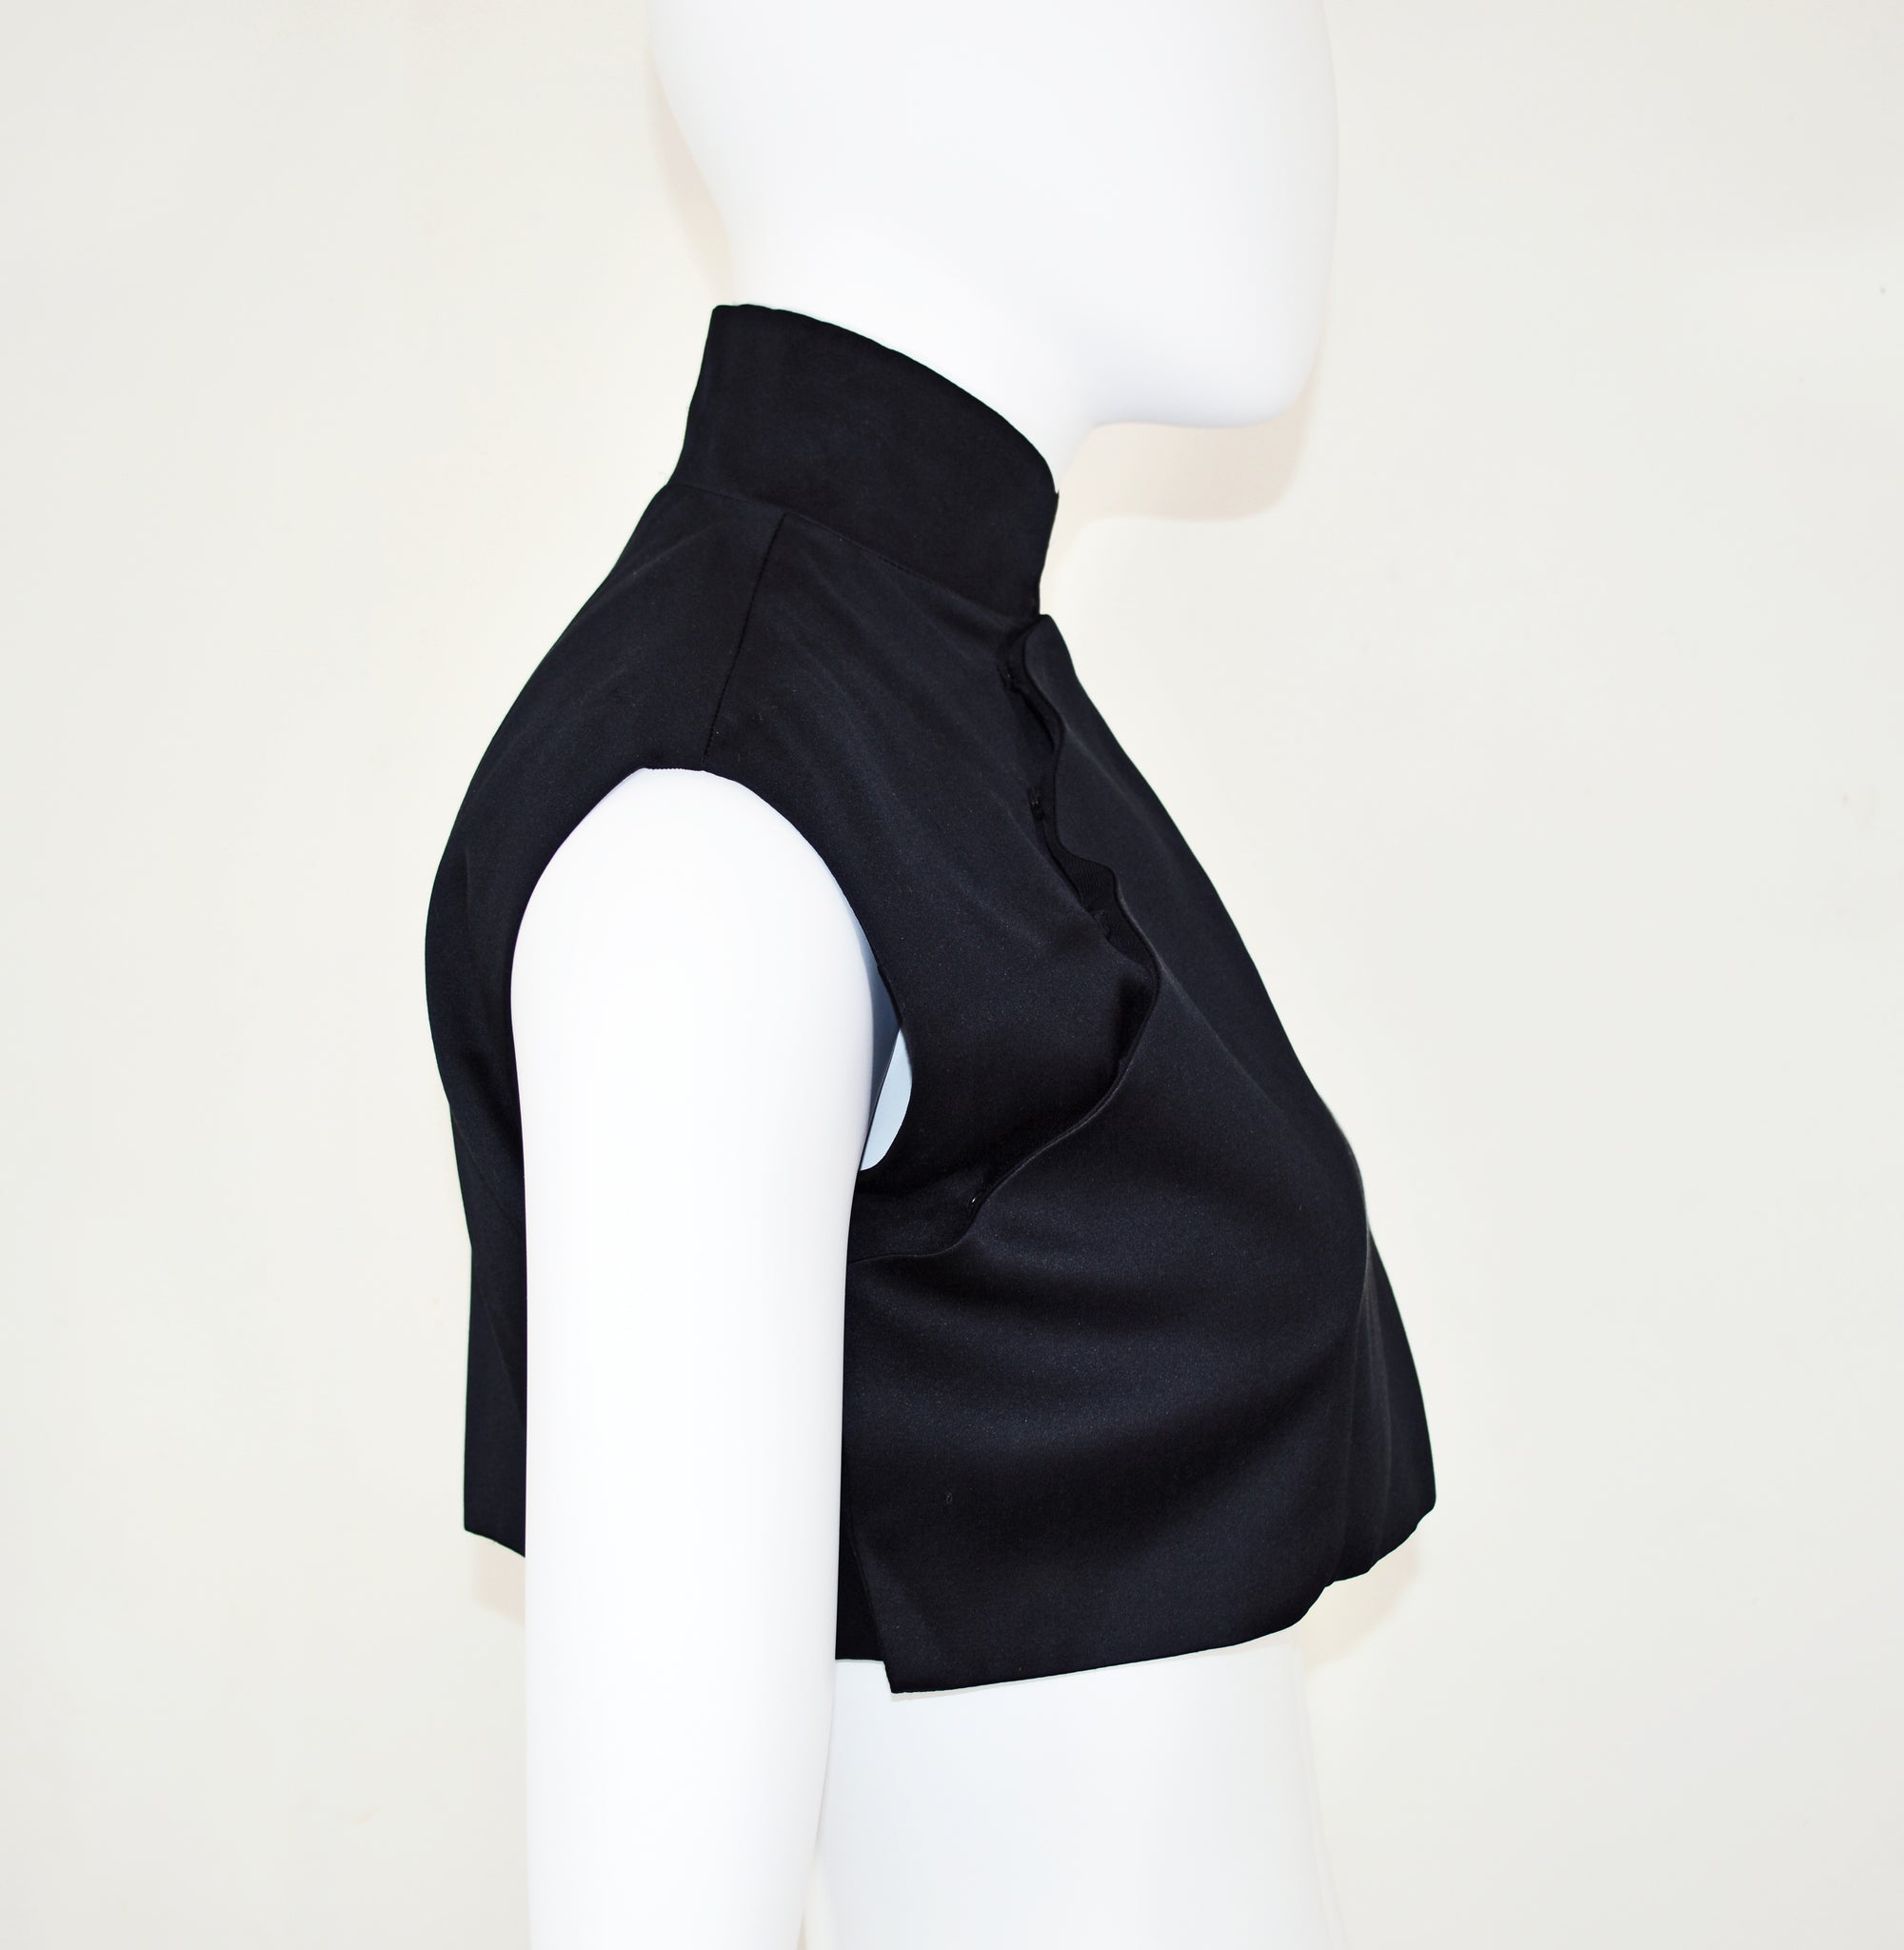 Yohji Yamamoto SS 1996 Silk Crop Vest